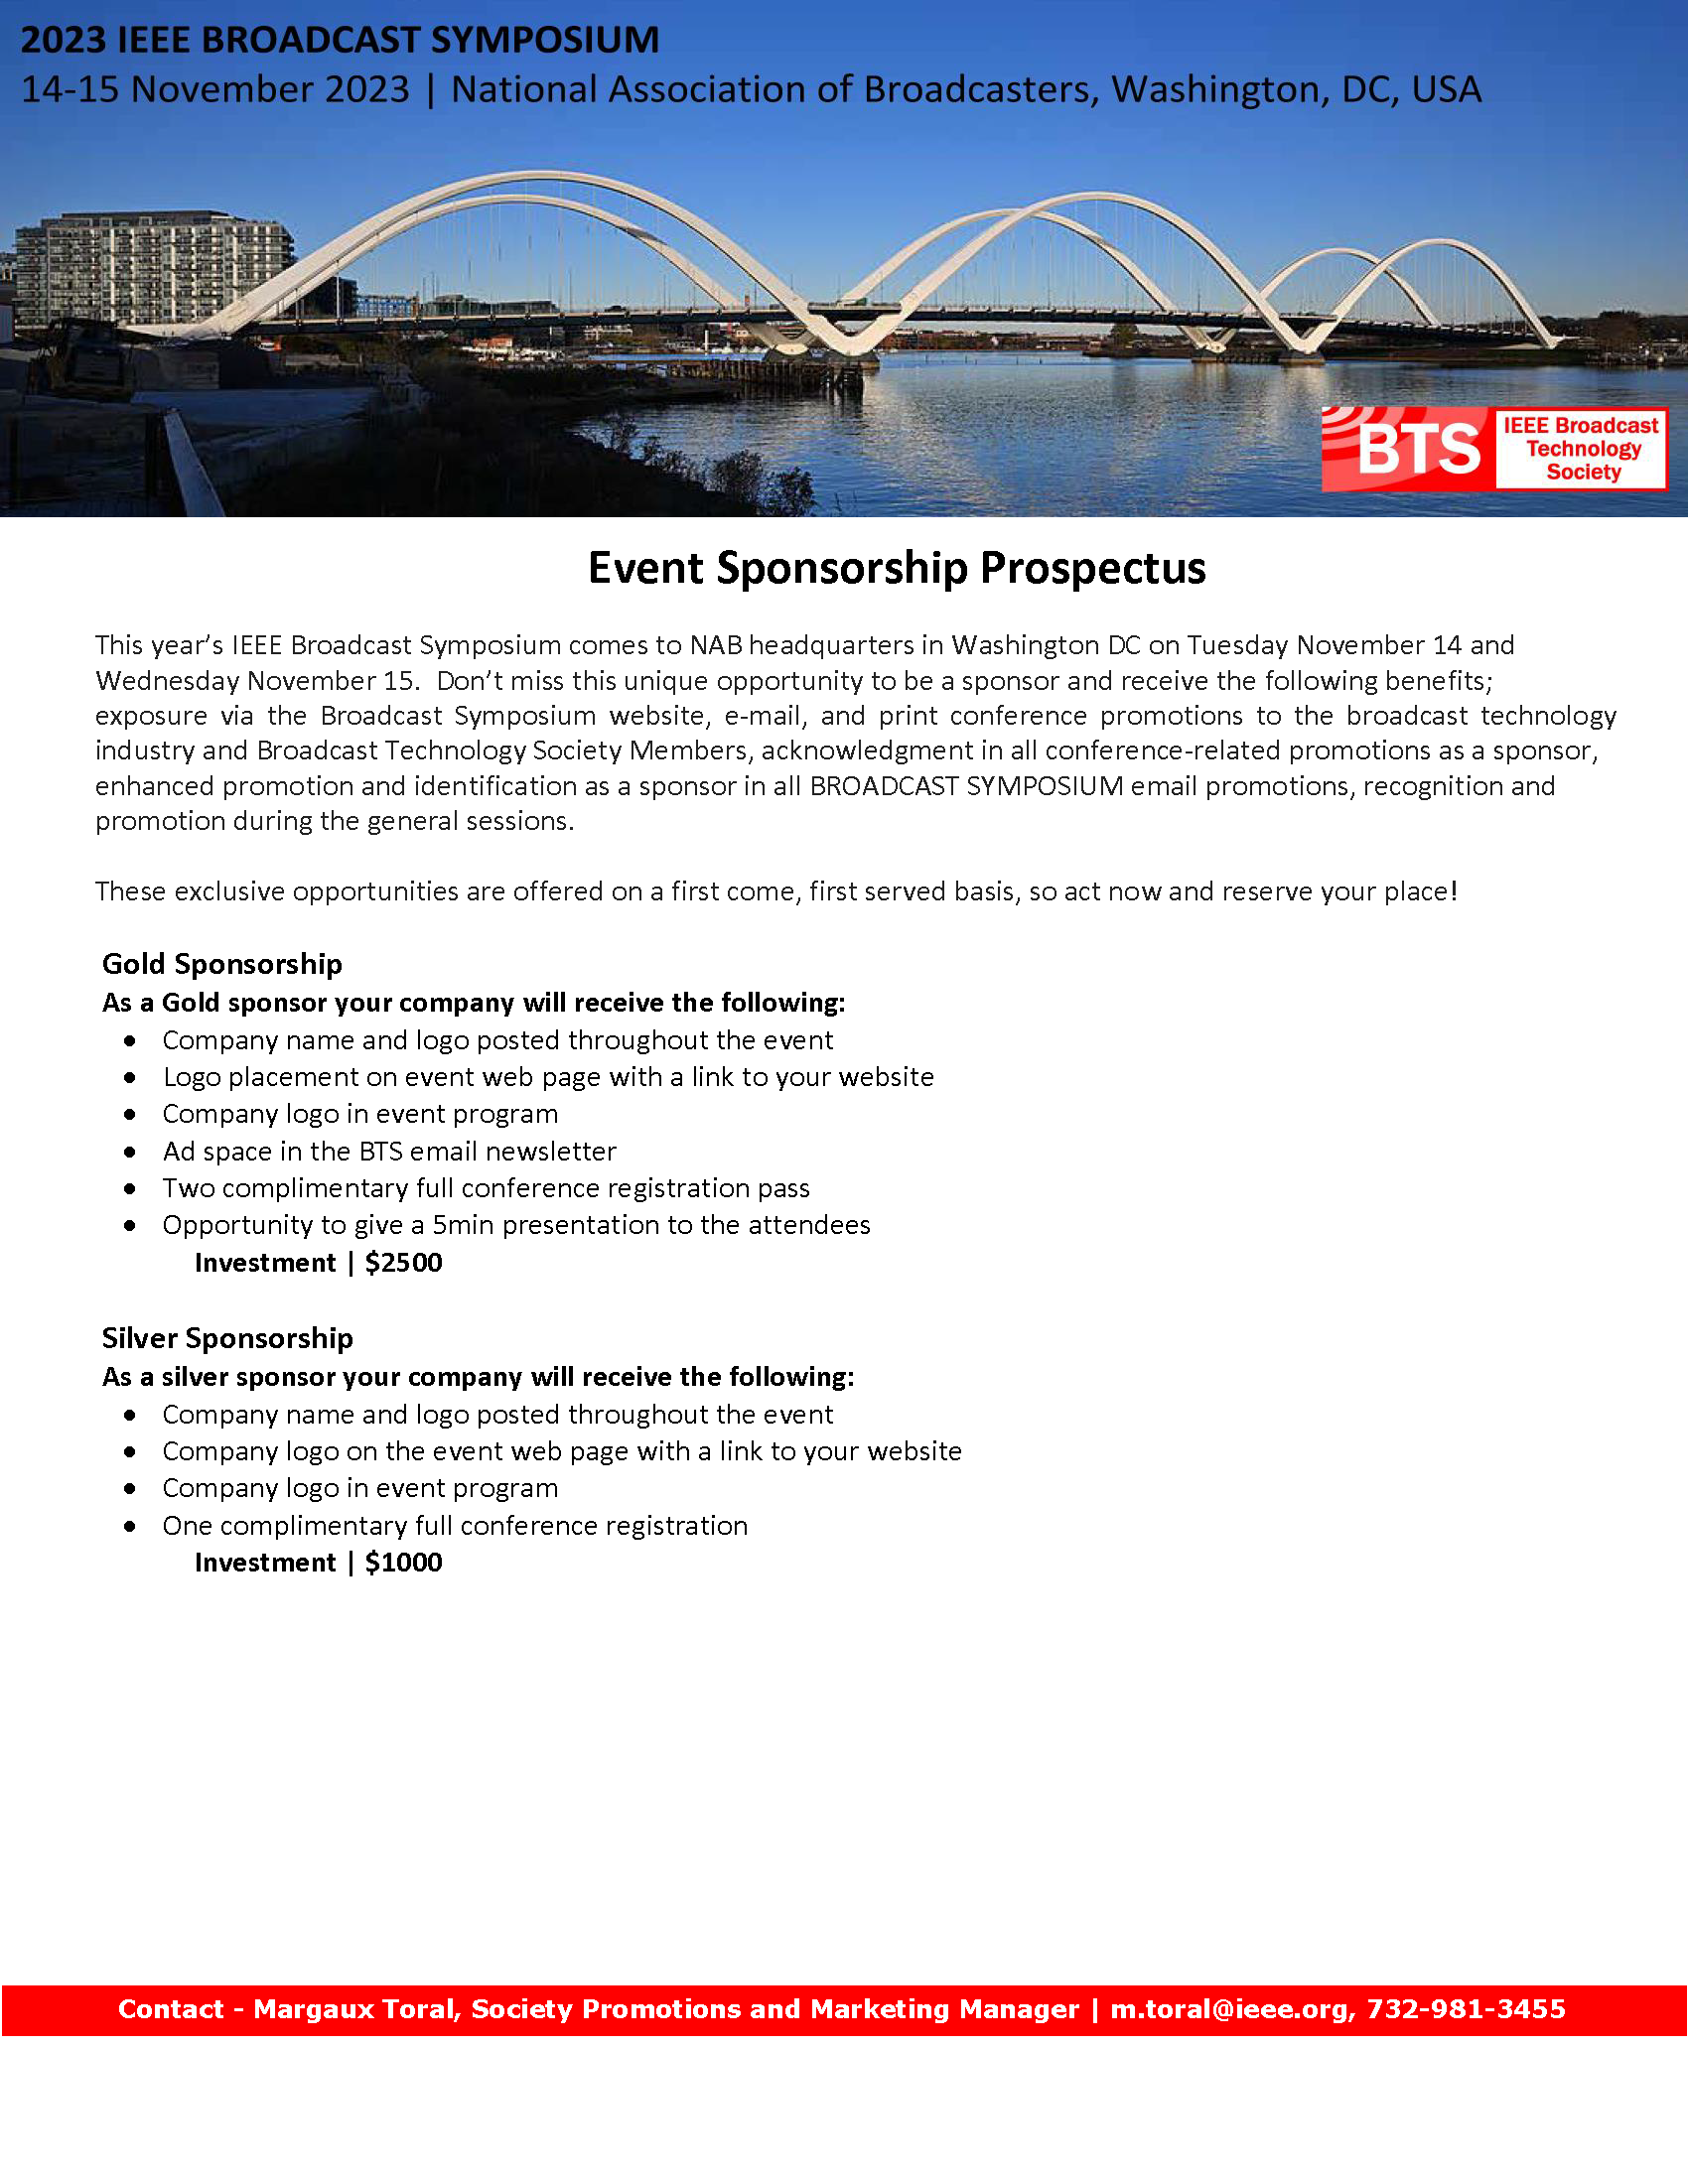 2023 Broadcast Symposium Sponsorship Prospectus